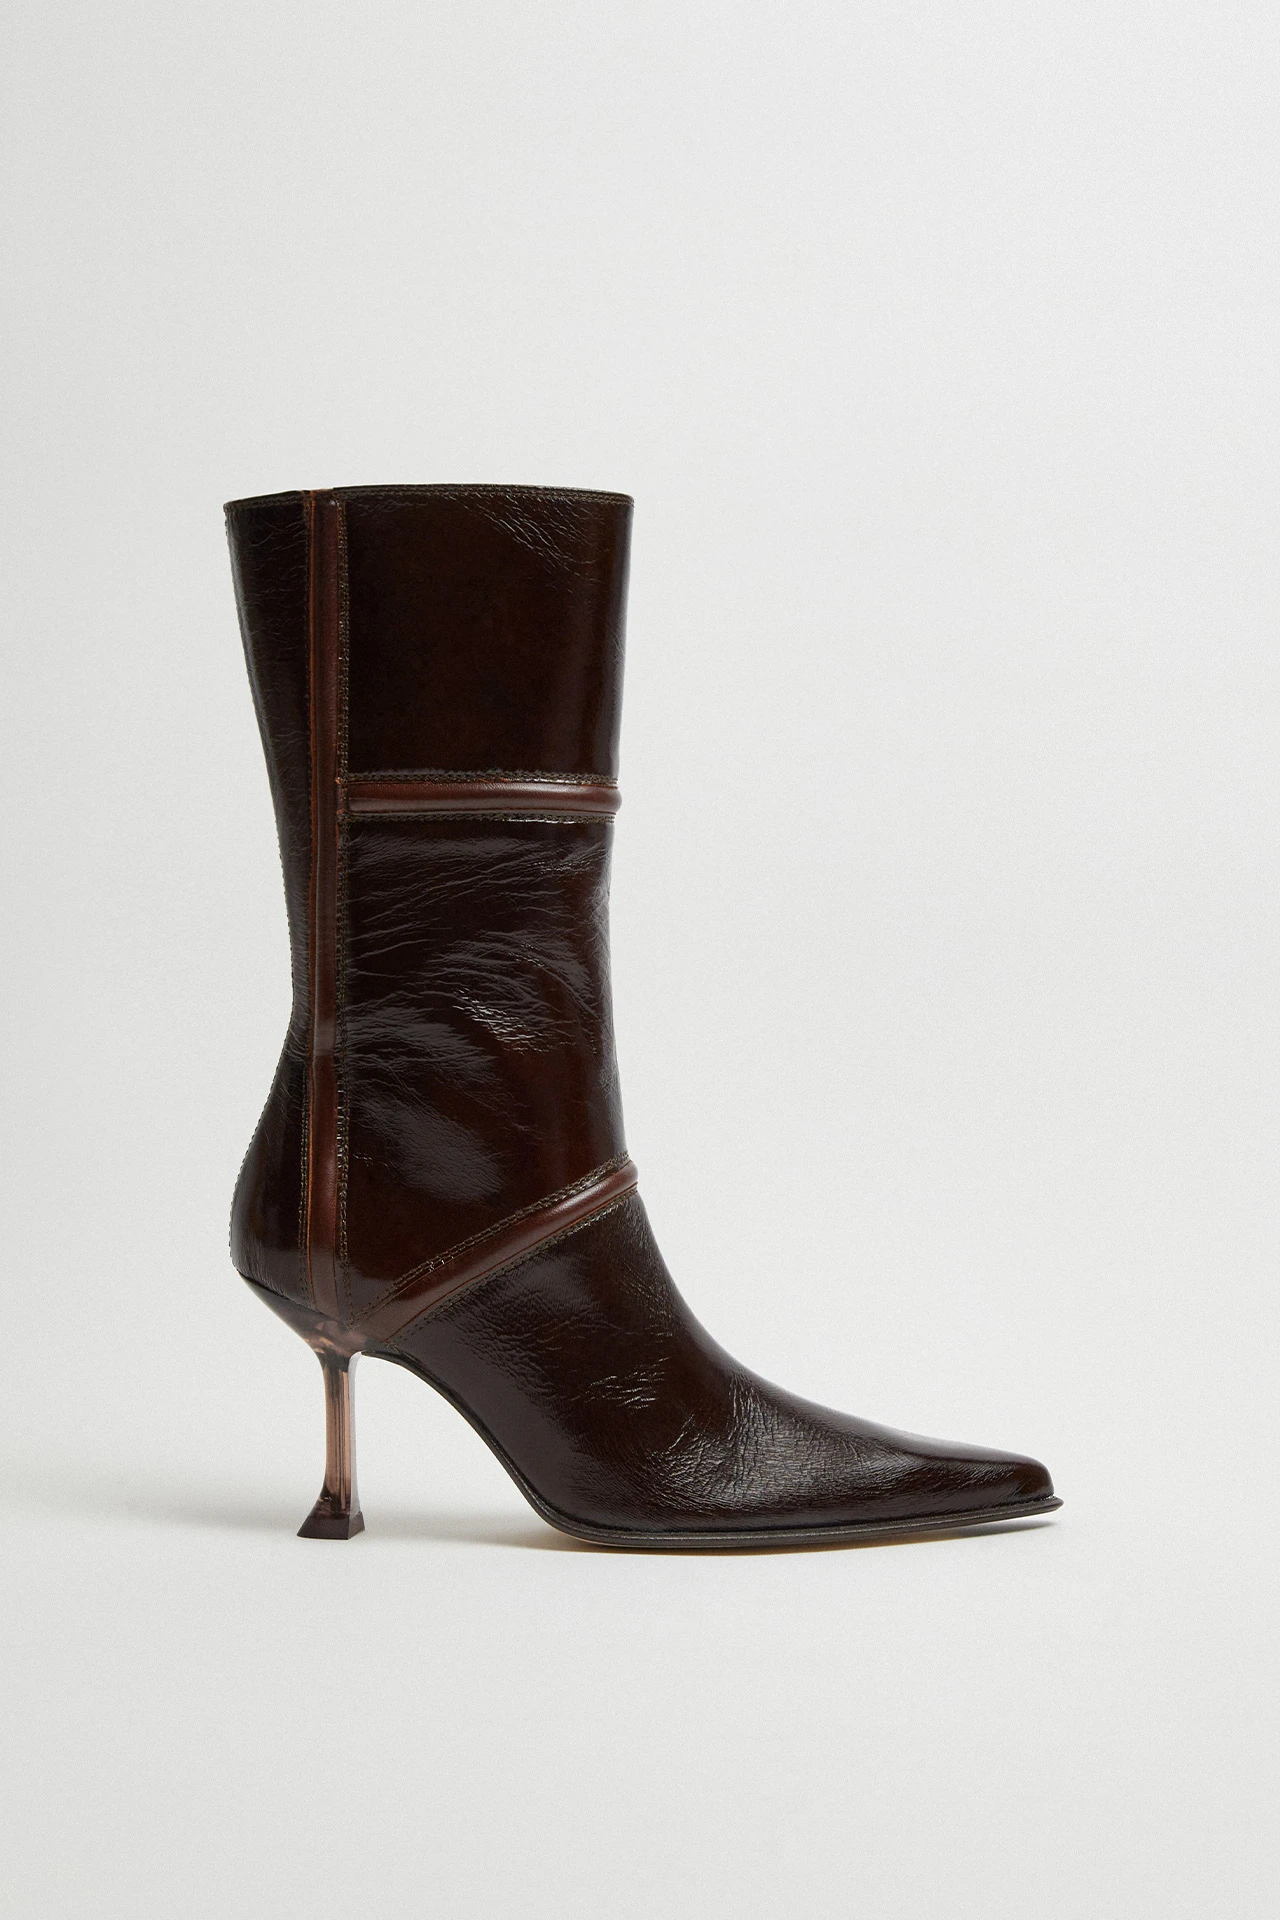 Miista-sander-brown-boots-01